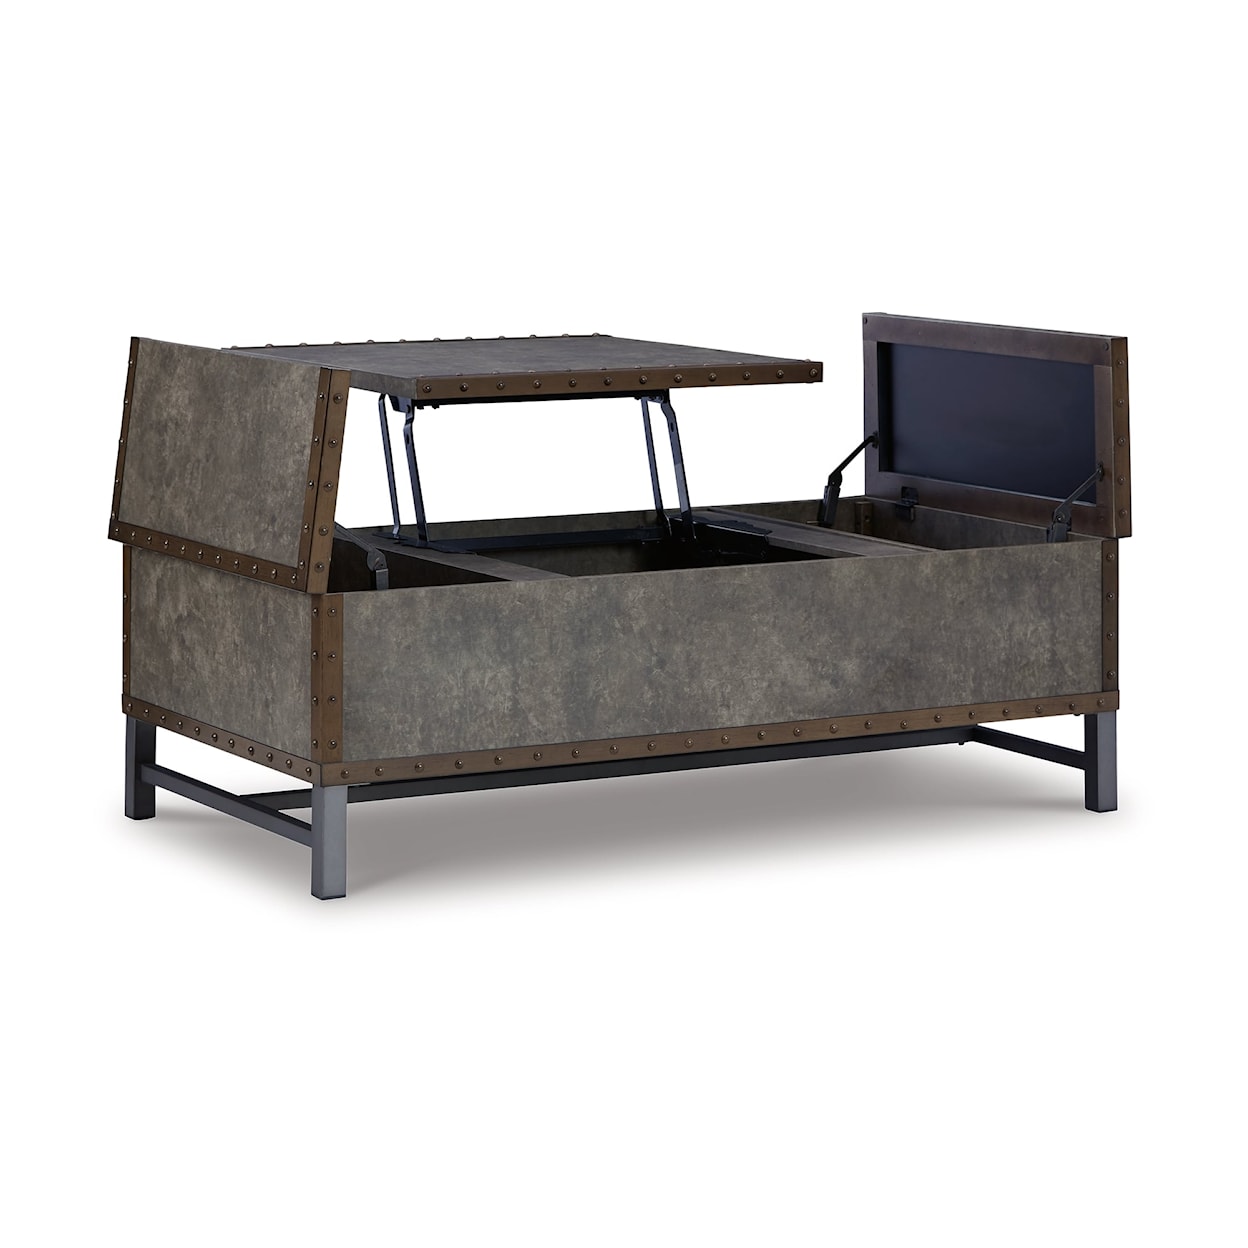 Ashley Furniture Signature Design Derrylin Lift-Top Coffee Table